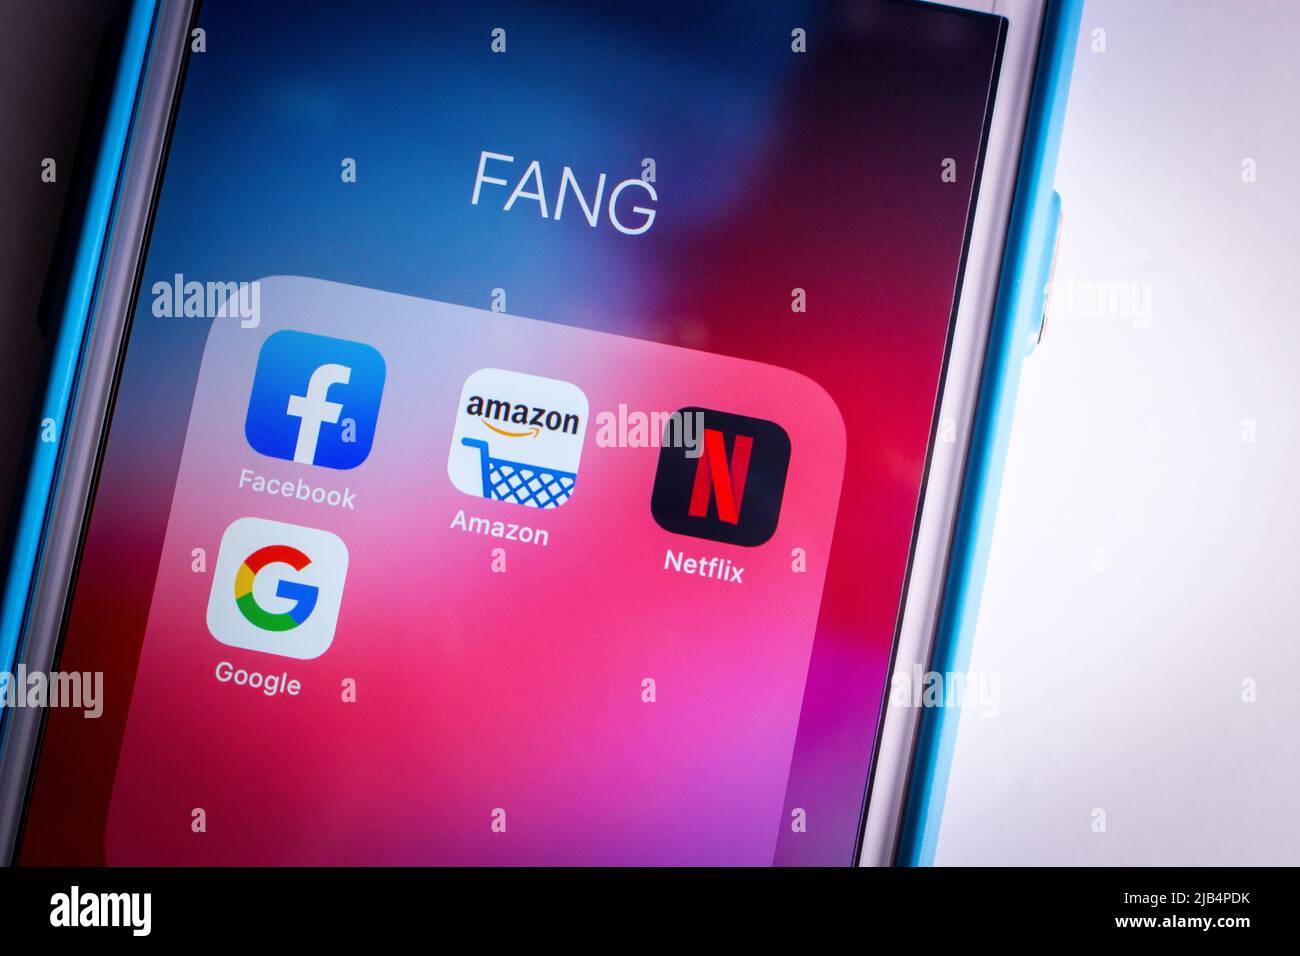 Kumamoto, Japan - Apr 23 2020 : Image of FANG Big Tech icons (Facebook, Amazon, Netflix & Google) on iPhone screen. FANG is an acronym /a buzzword. Stock Photo